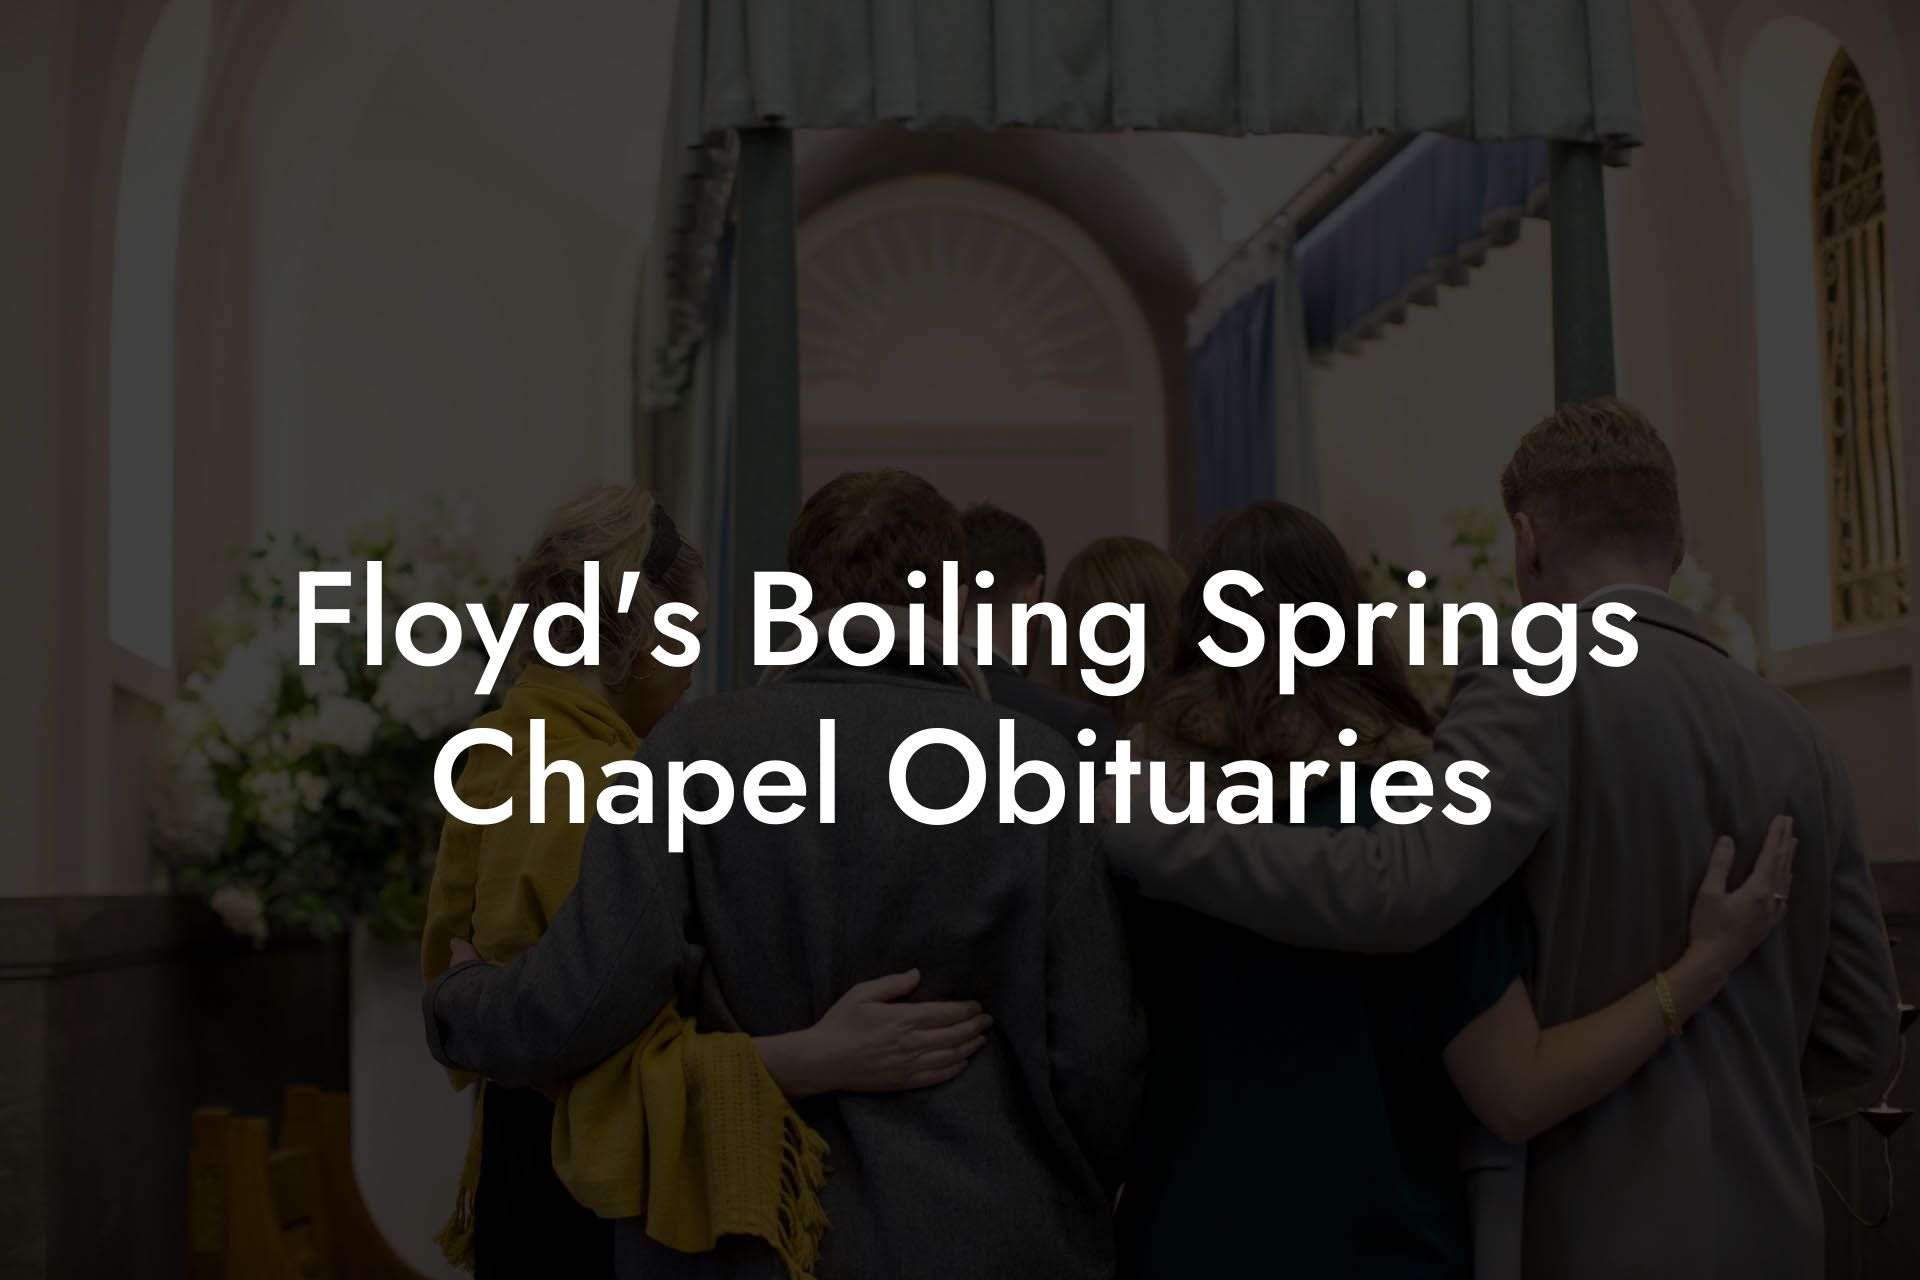 Floyd's Boiling Springs Chapel Obituaries